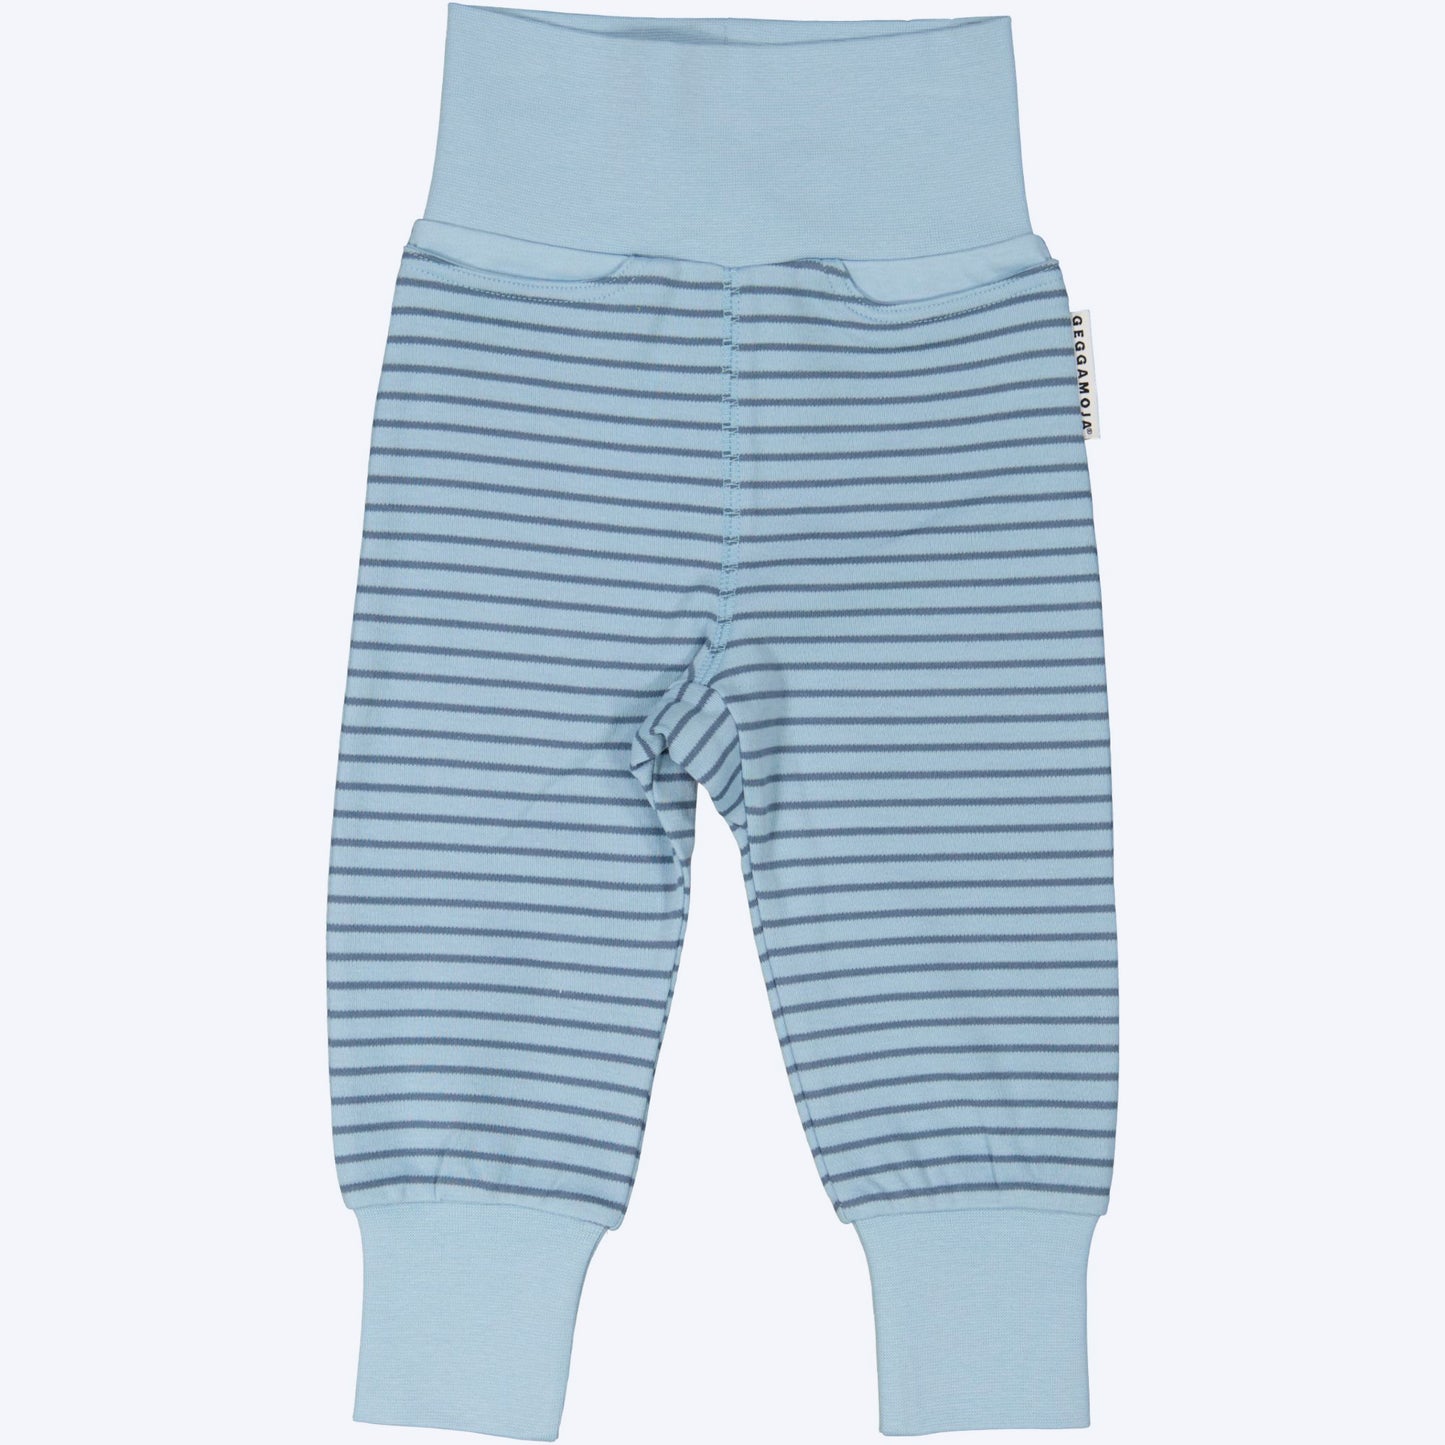 Geggamoja® Organic Cotton Baby Pants - LIGHT BLUE STRIPE